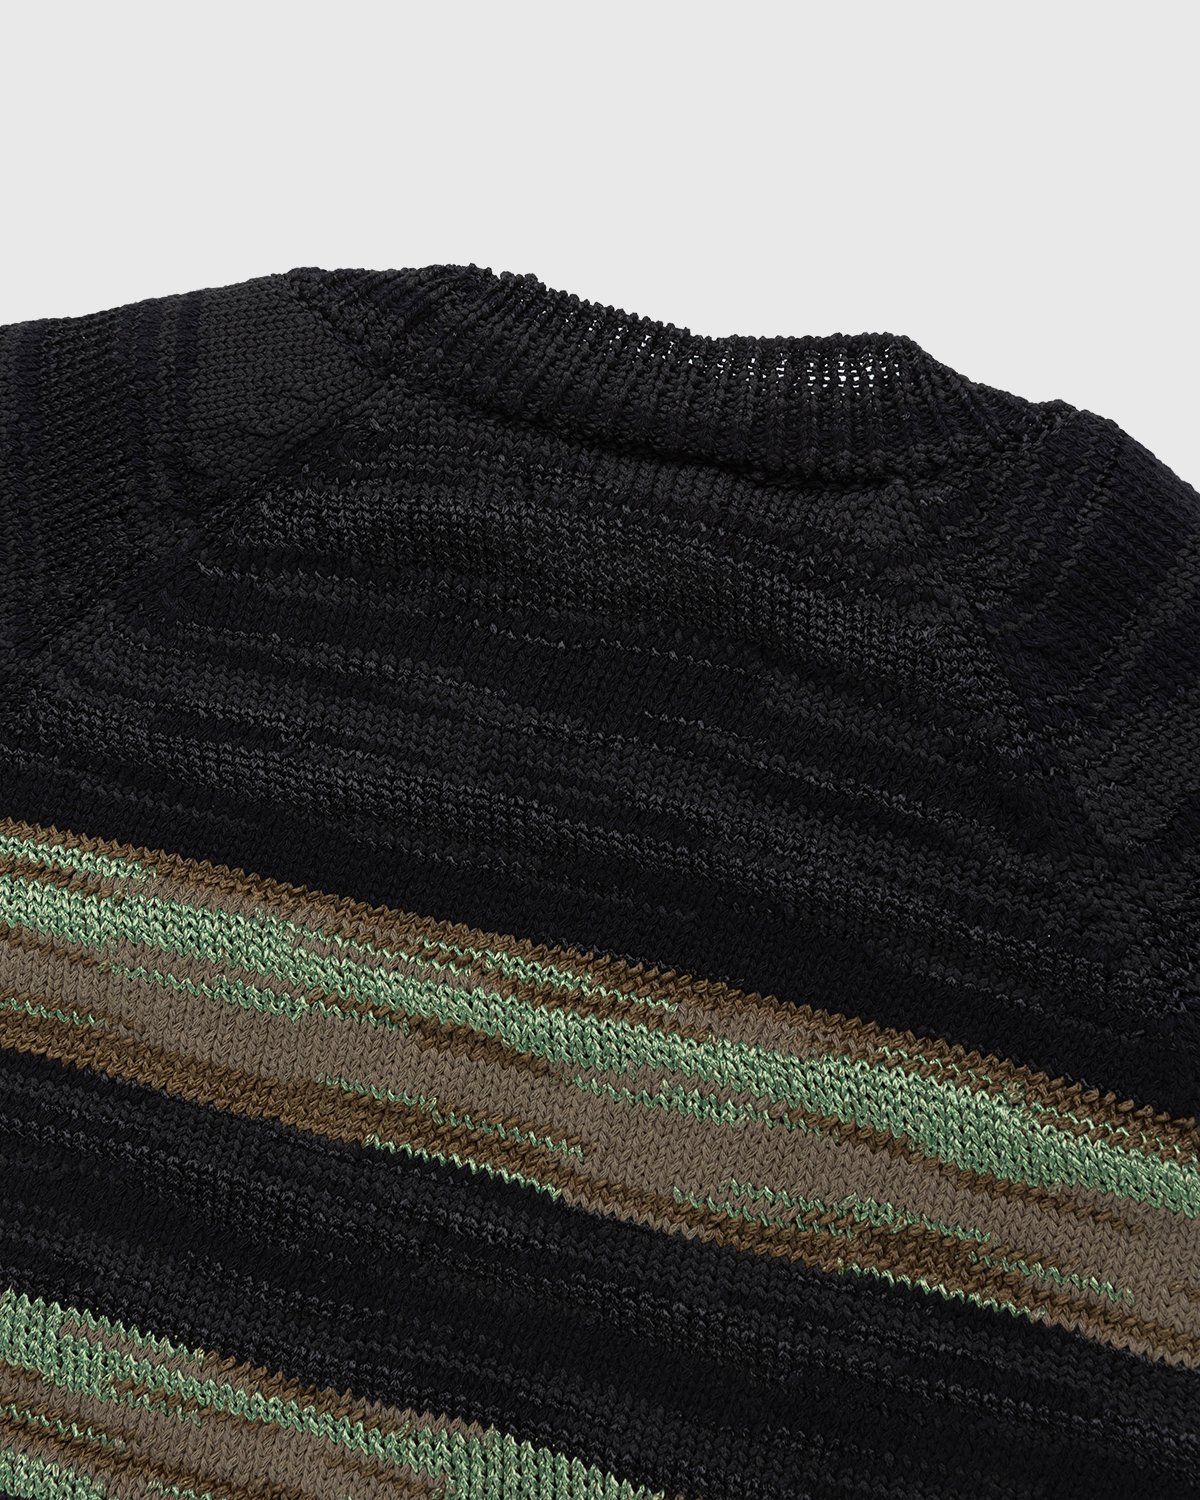 Dries van Noten - Janitor Intarsia Knit Sweater Black - Clothing - Black - Image 4